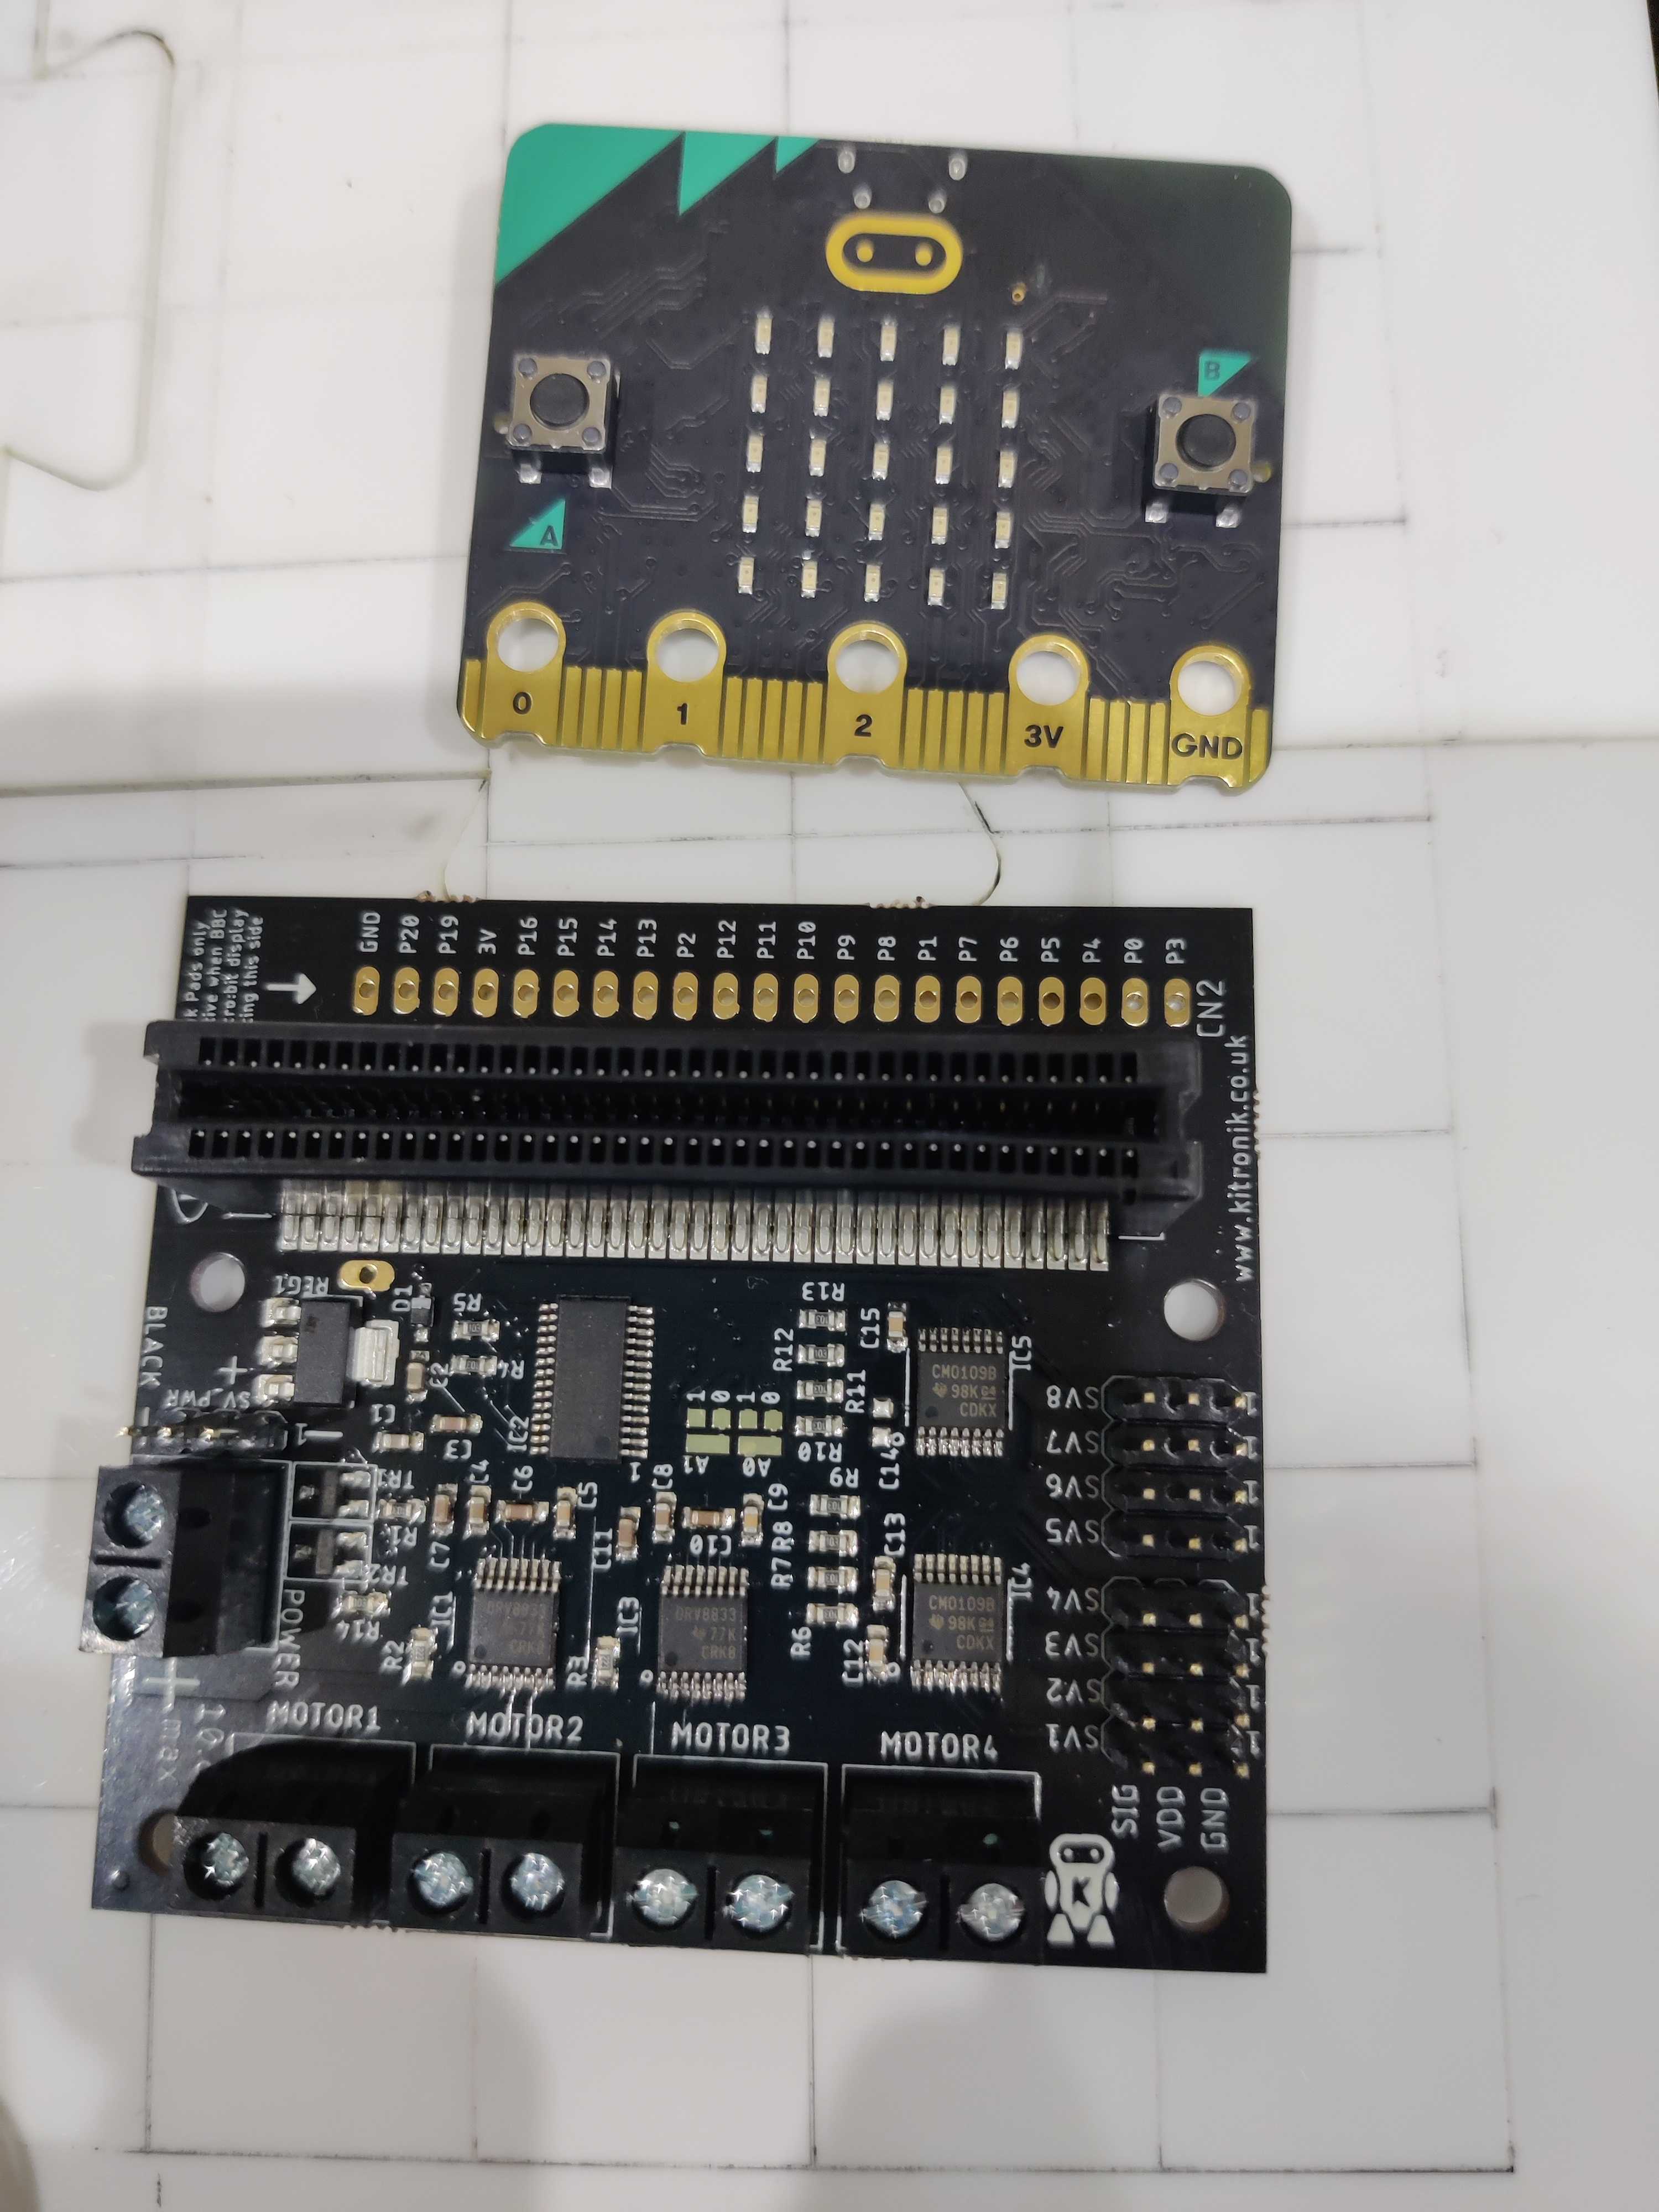 Aligning Microbit and Robotics Board